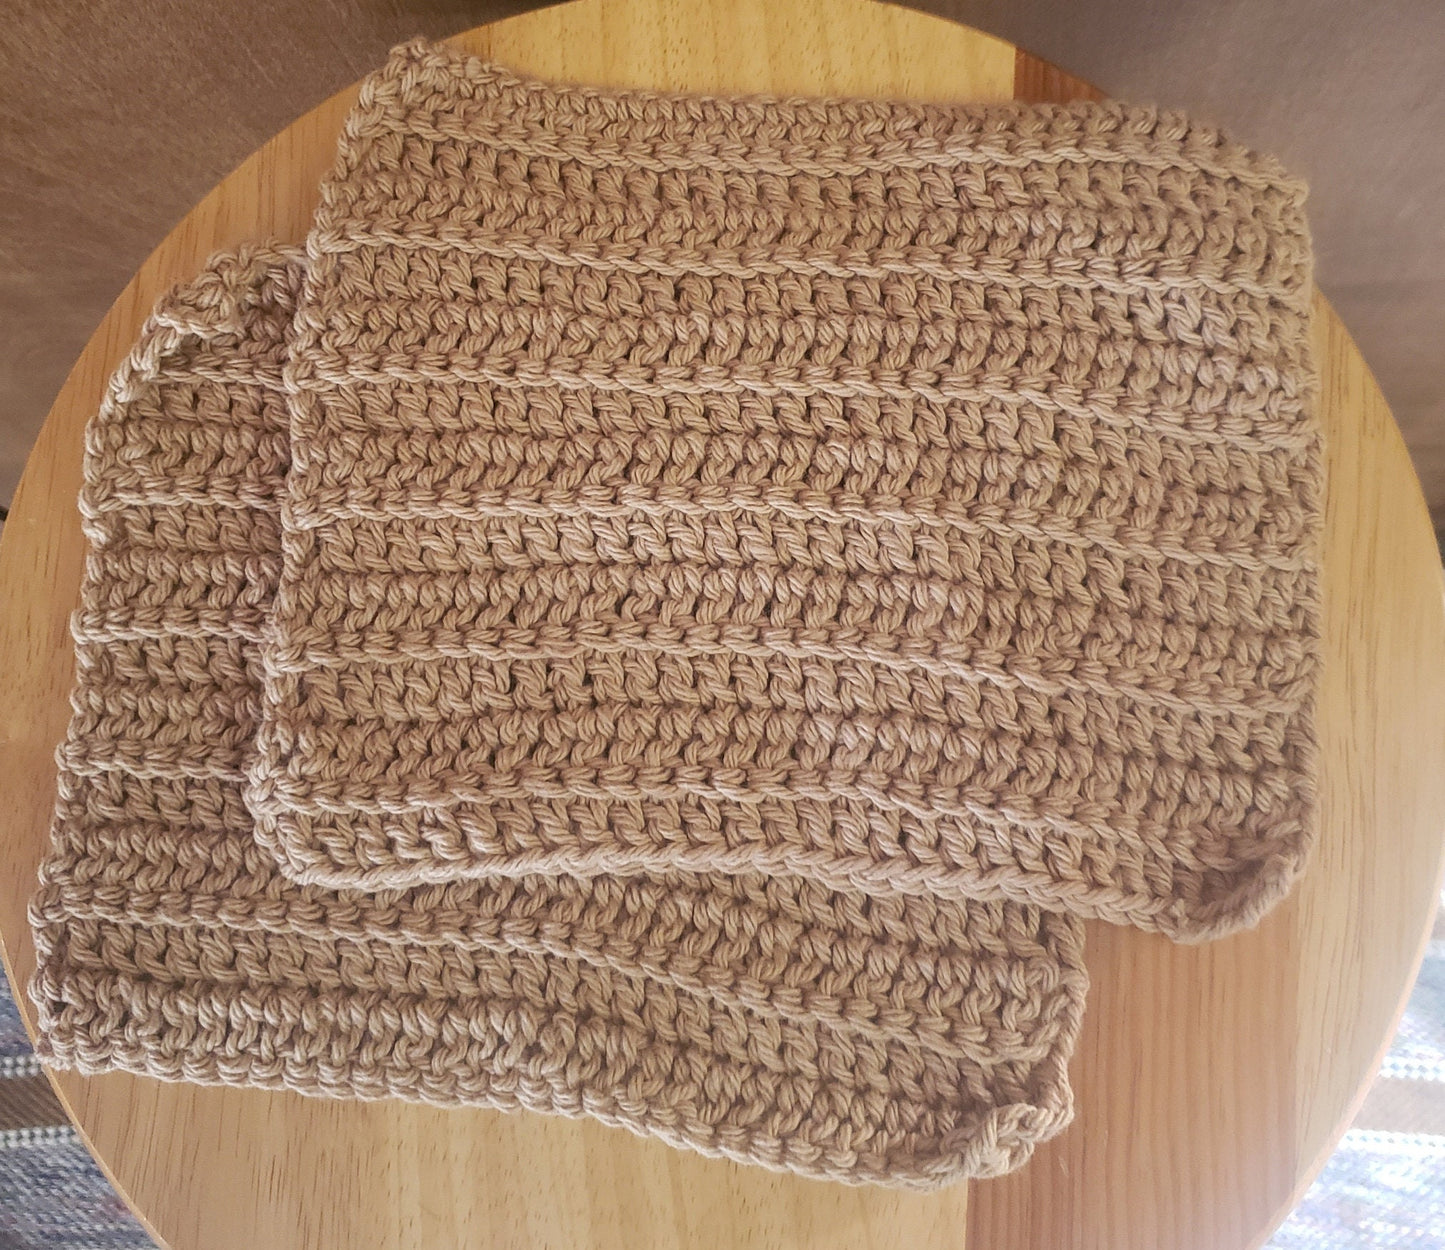 Set of 2 Hand-Knitted Dishcloths (Tan/Khaki)